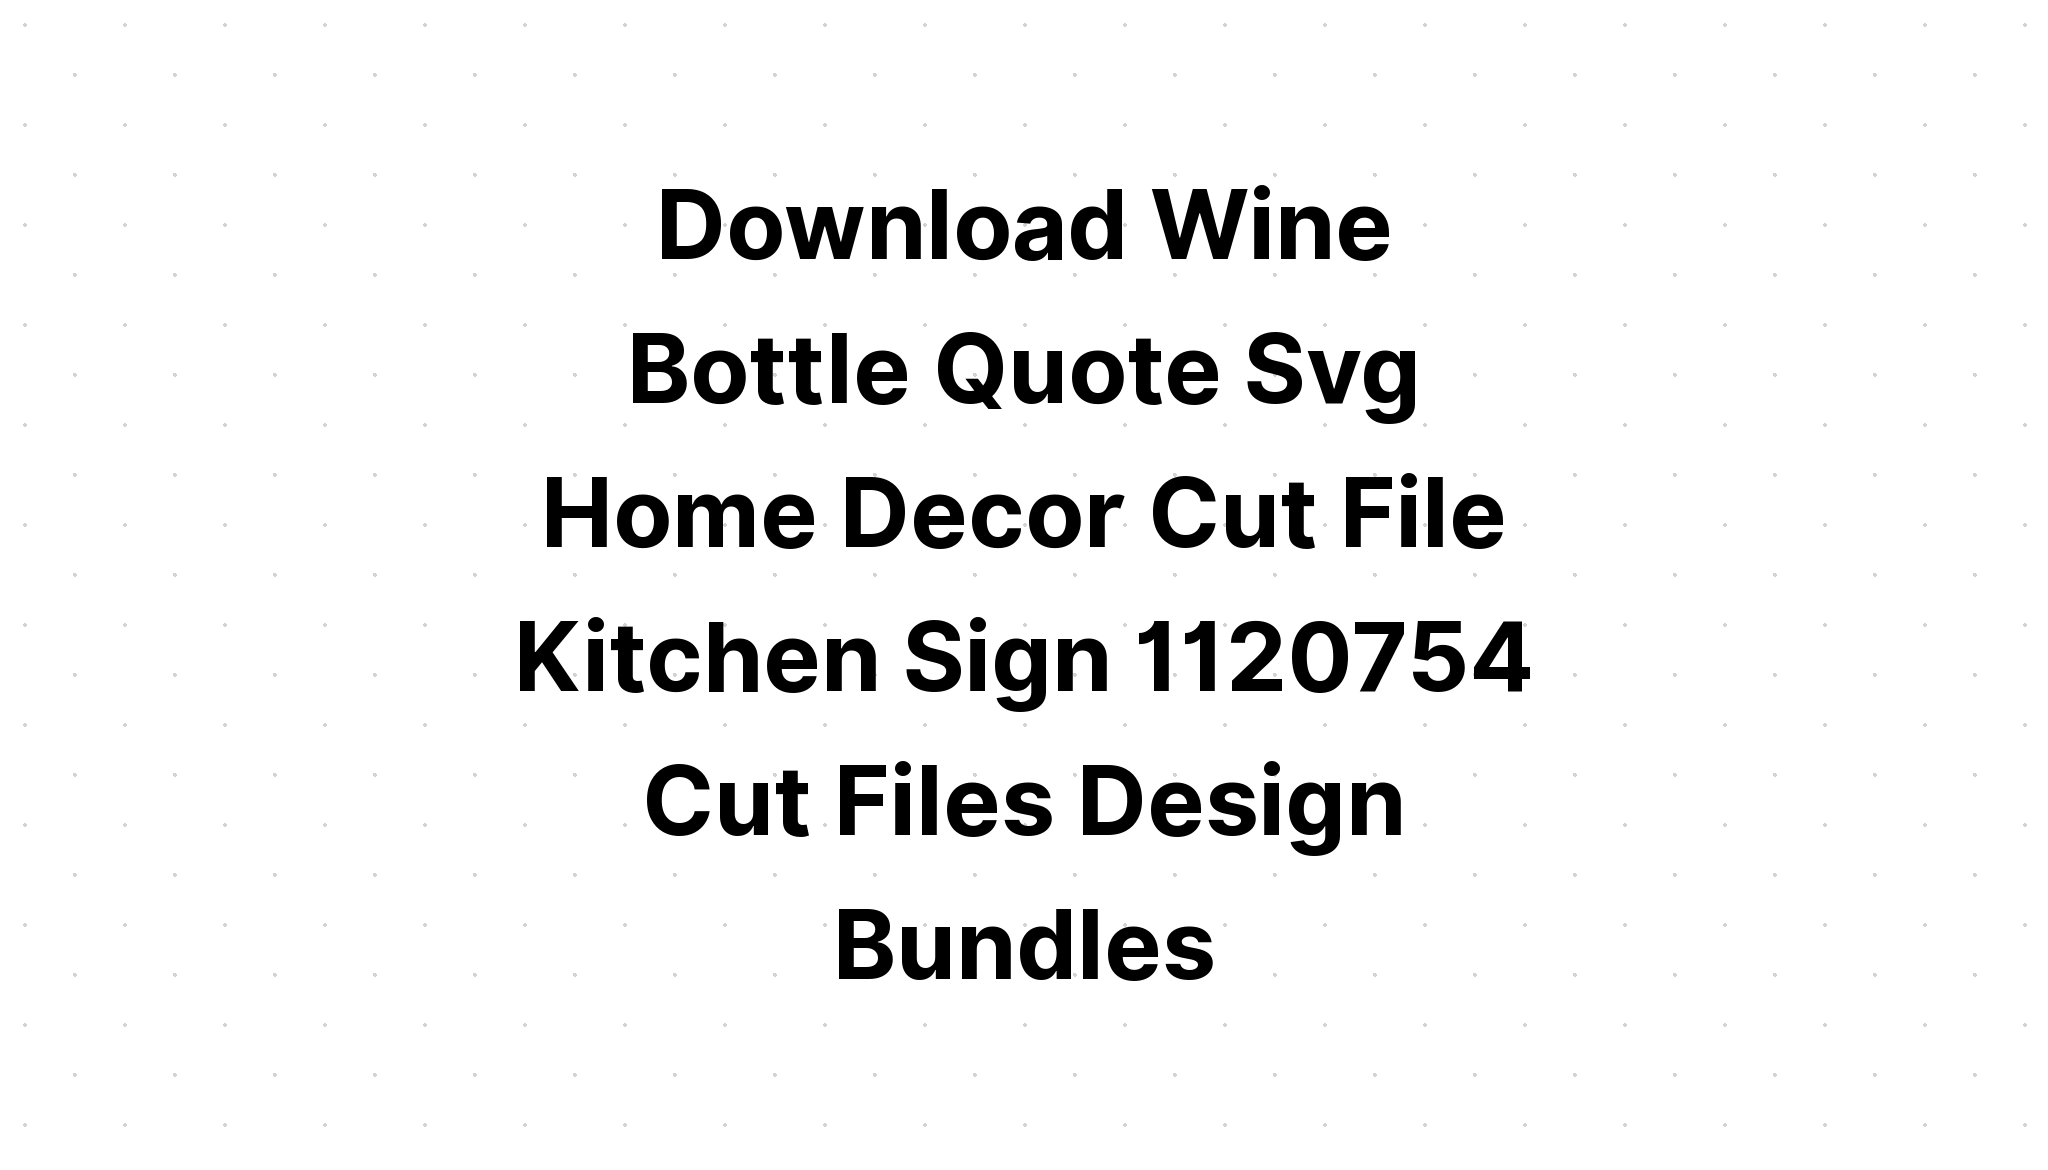 Download Wine Bundle 30 Funny Wine Quotes SVG File